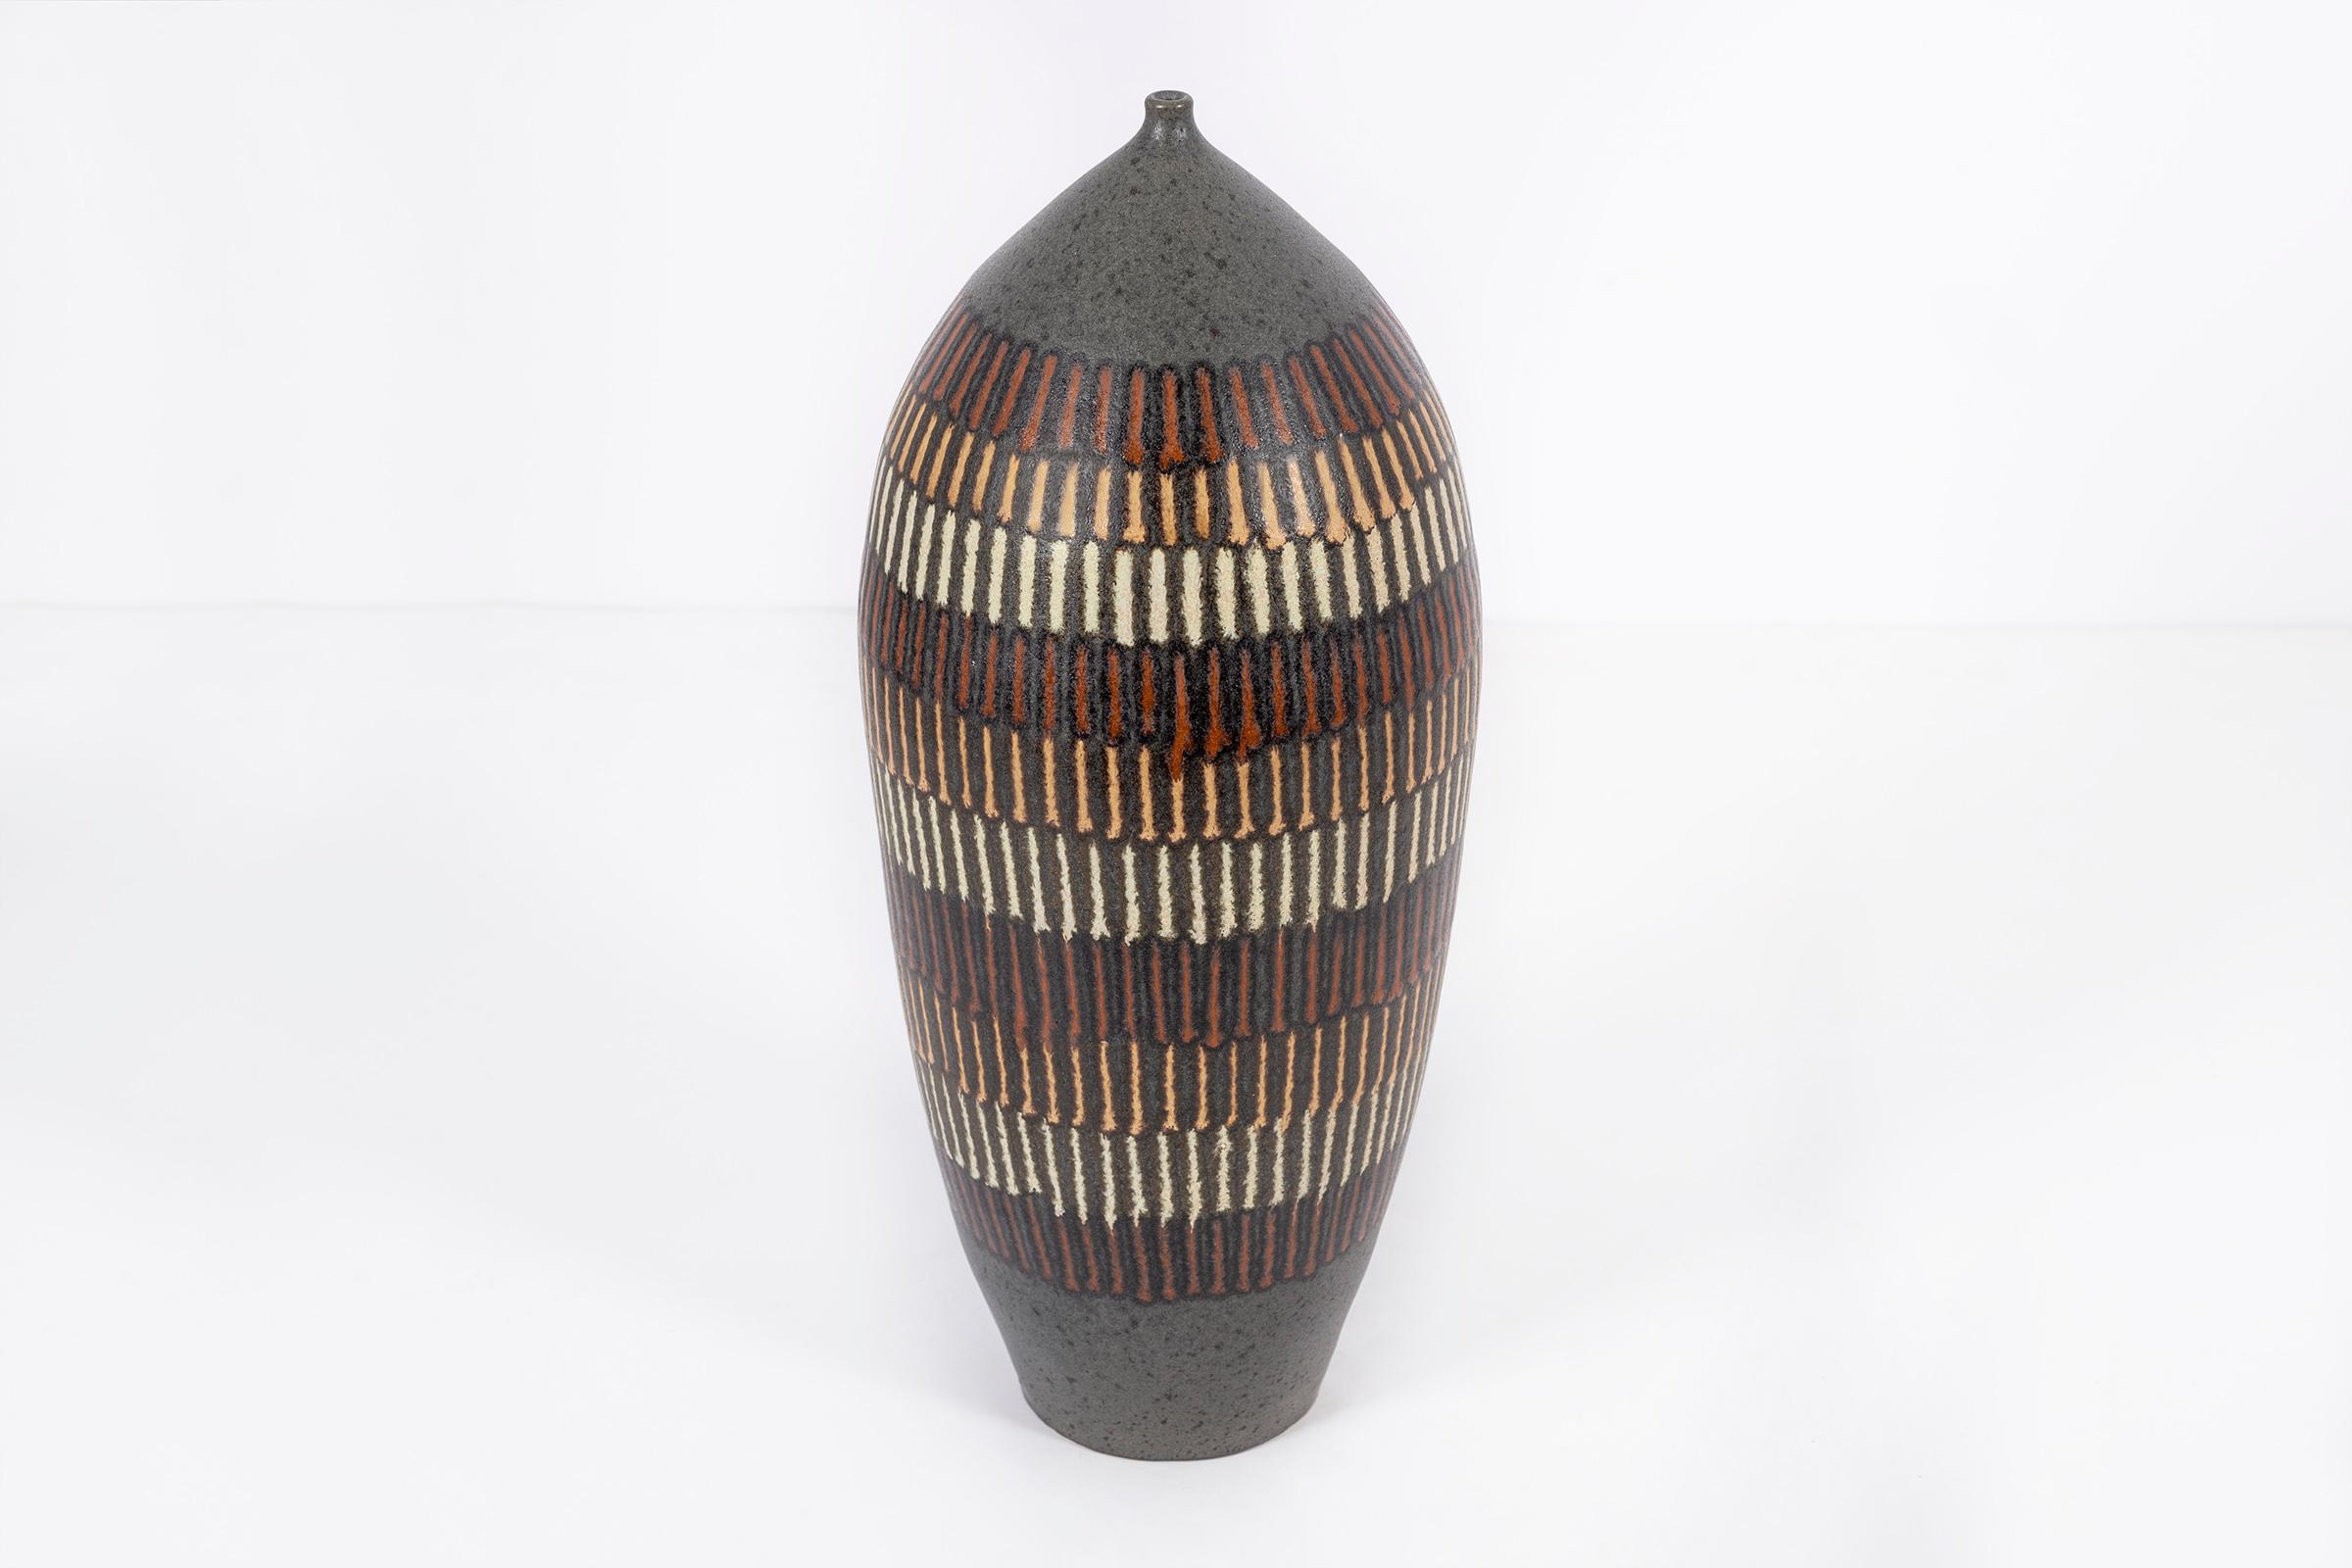 Clyde Burt ceramic vase in glazed stoneware multicolored glaze.
Signed to underside: [CB].
American, circa 1965.